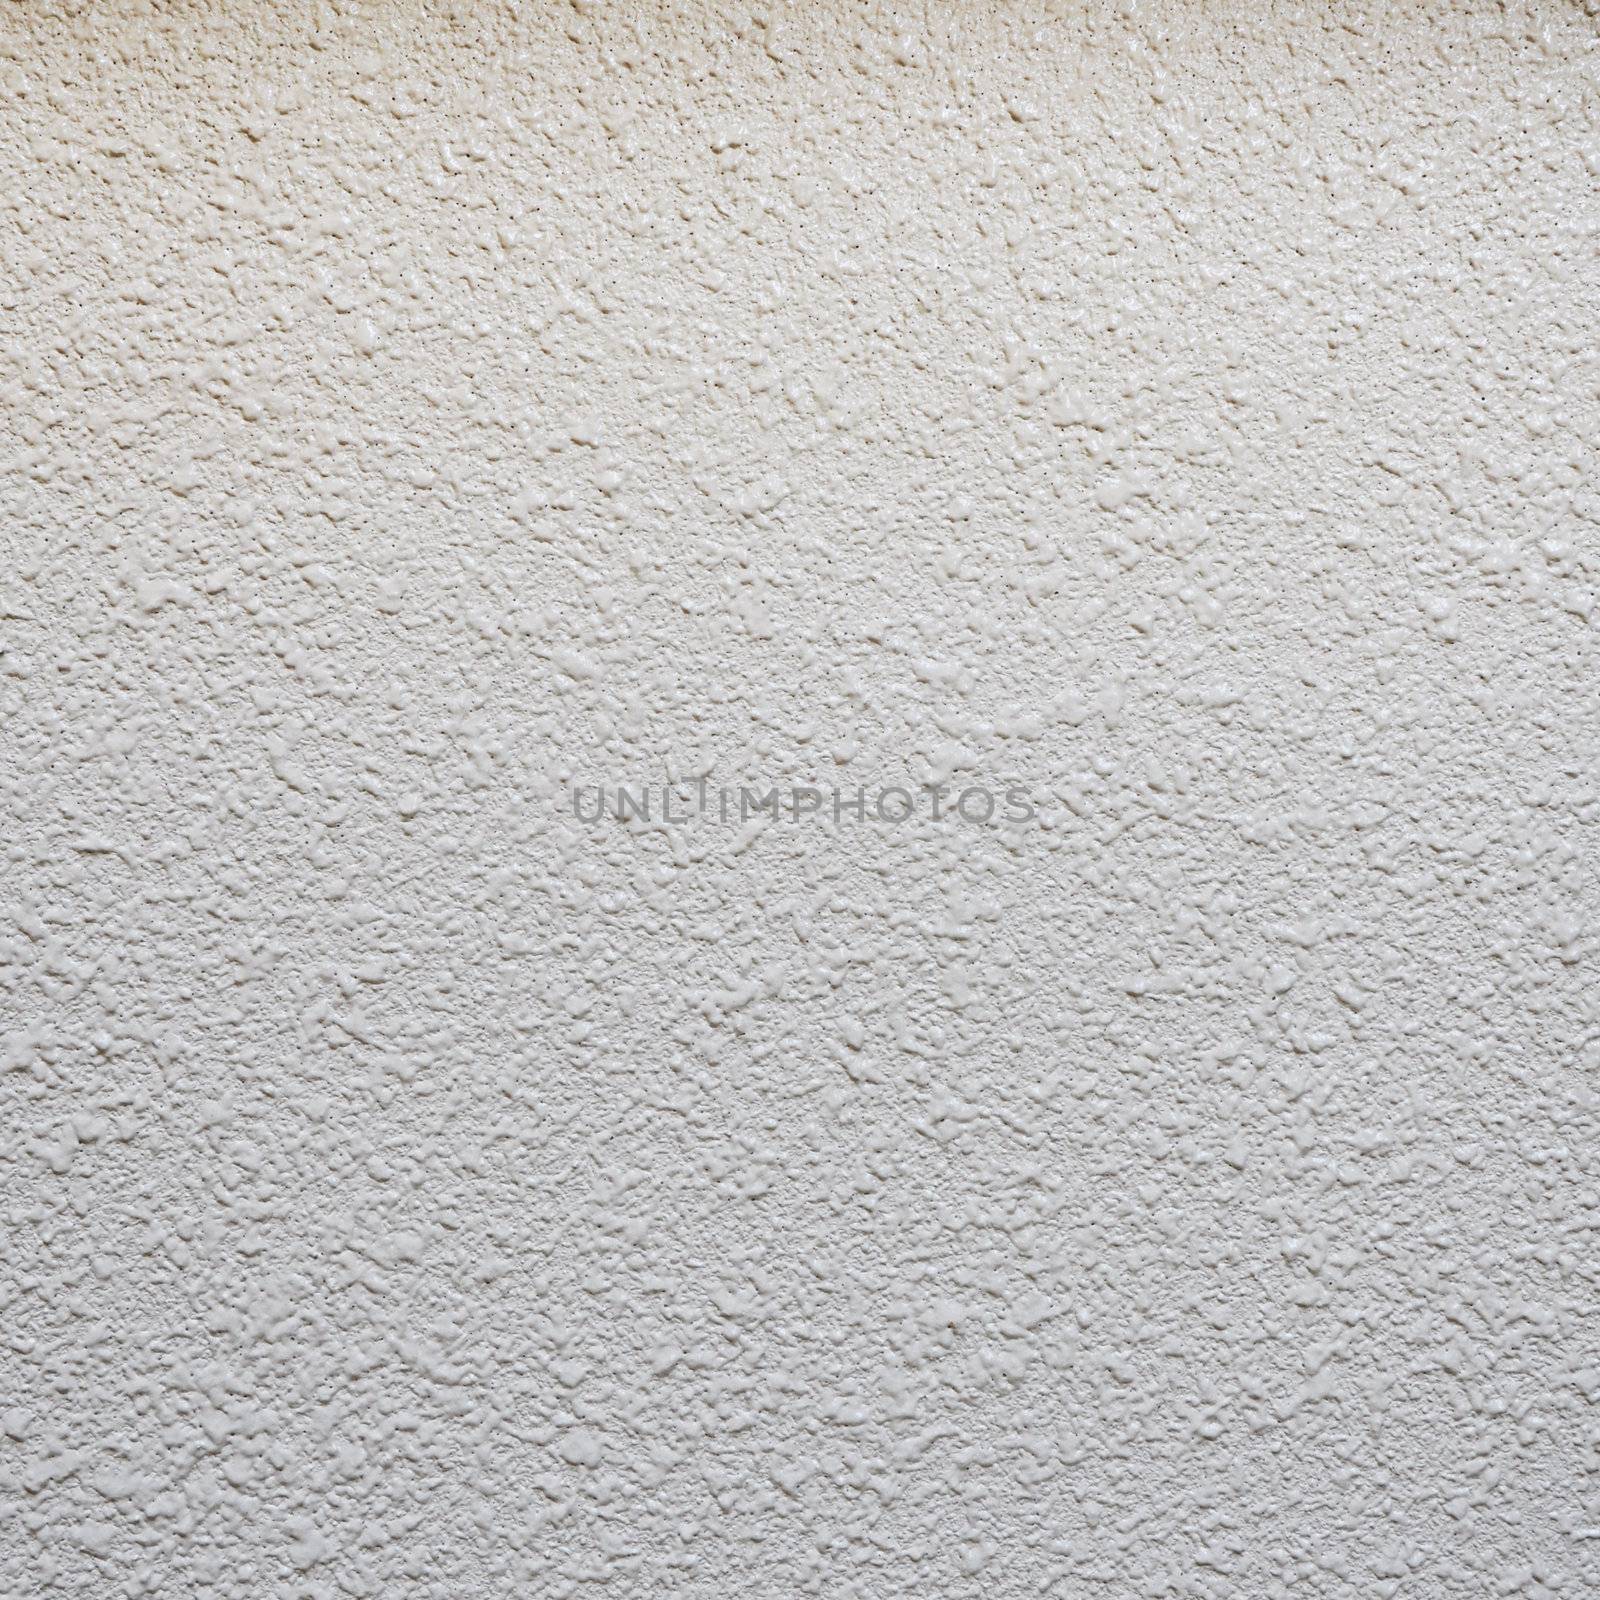 White wall stucco by siraanamwong